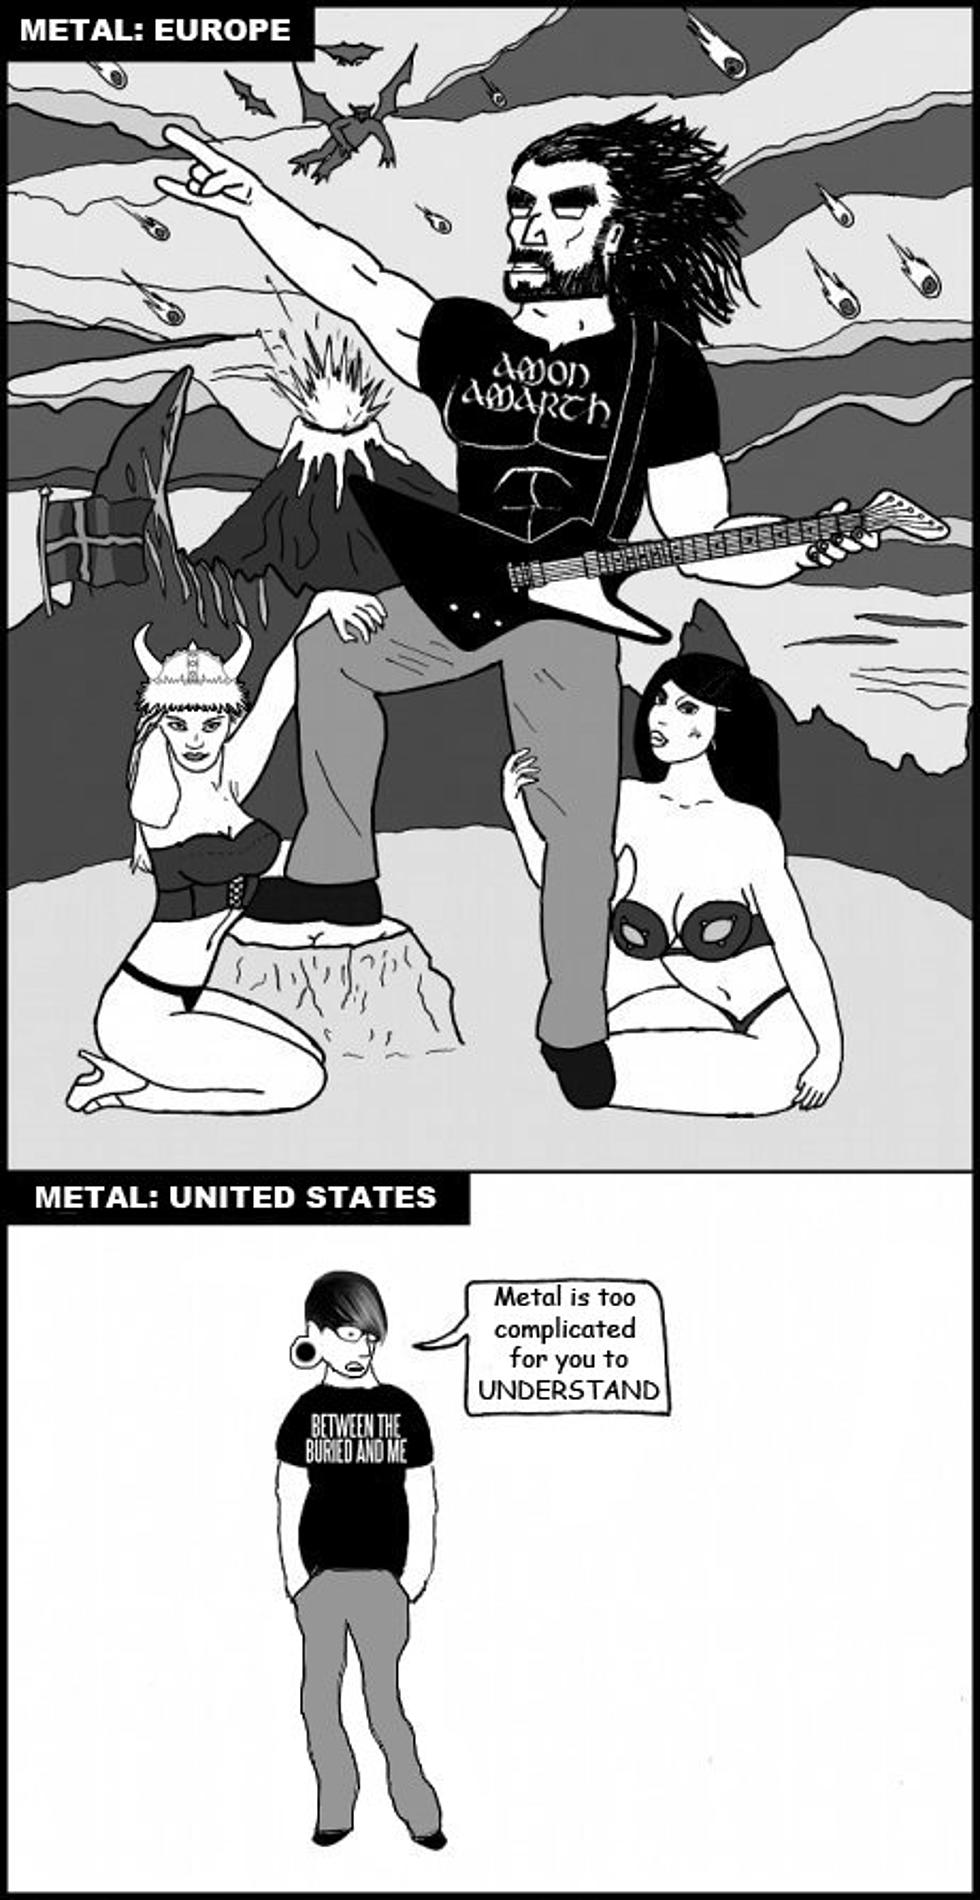 Metal in Europe vs. Metal in the United States